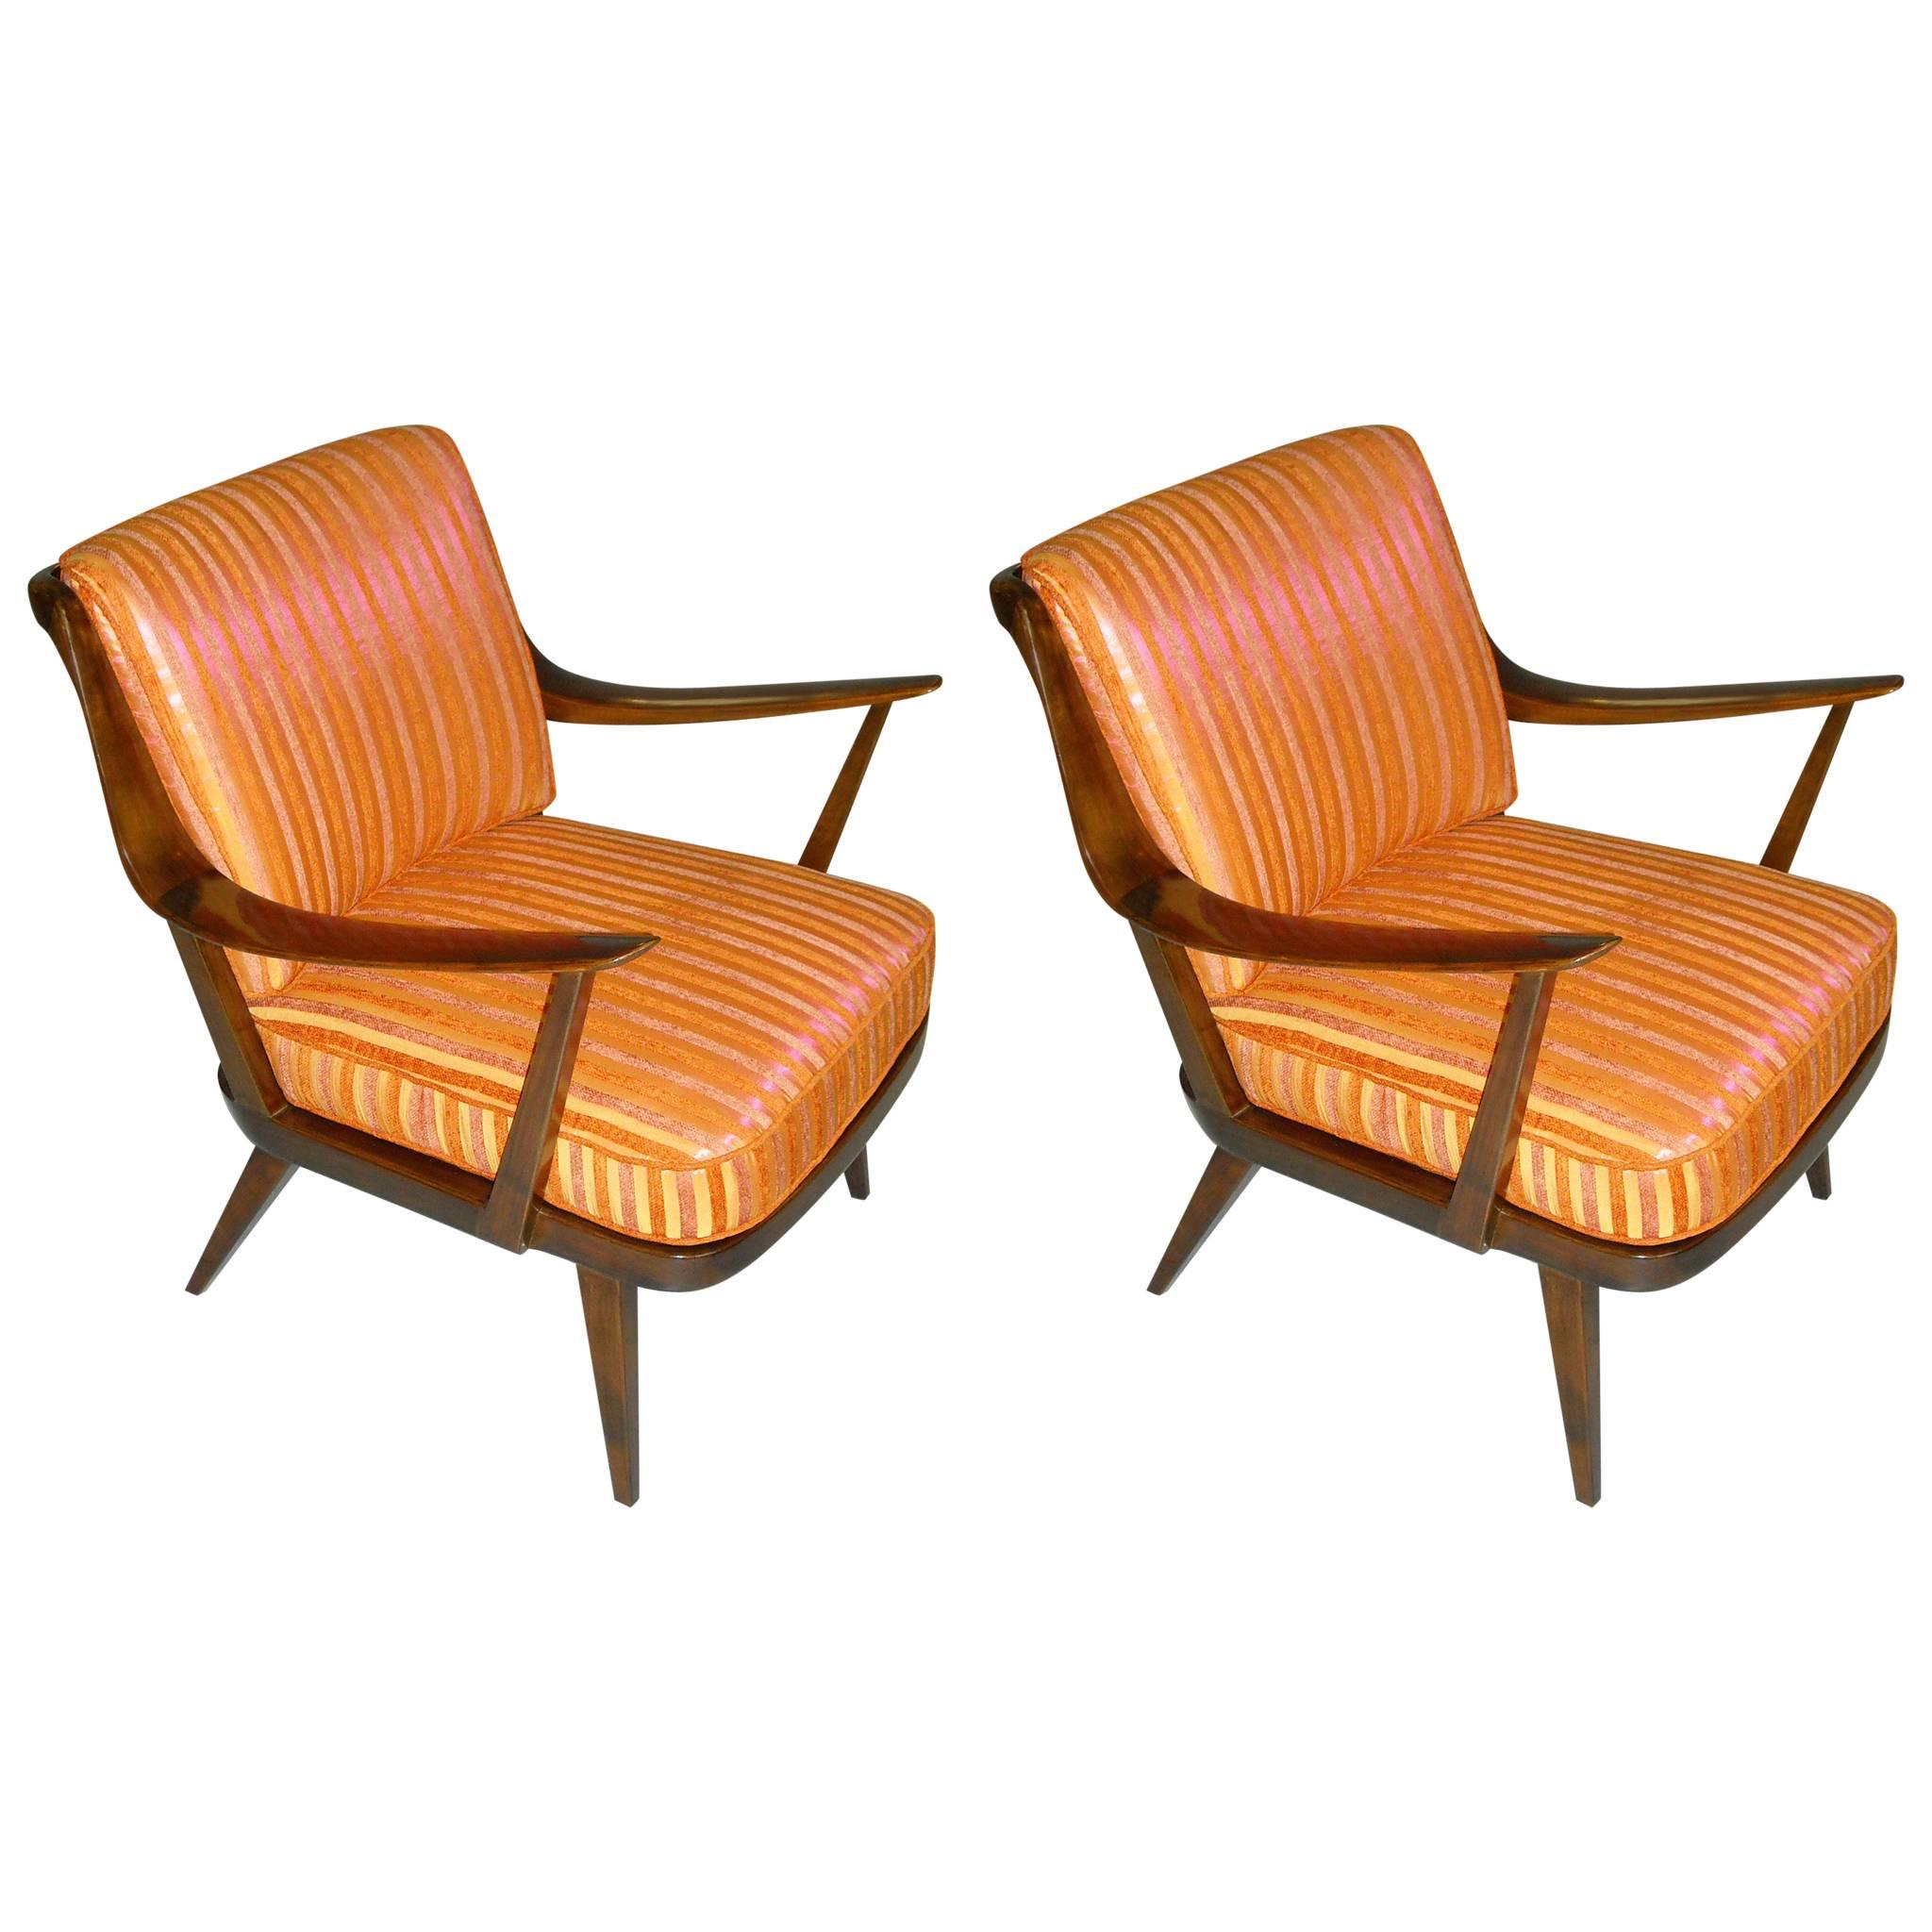 Paar Knoll Antimott Sessel, getönte Birke, gelb-orangefarbene Seide, wiederhergestellt